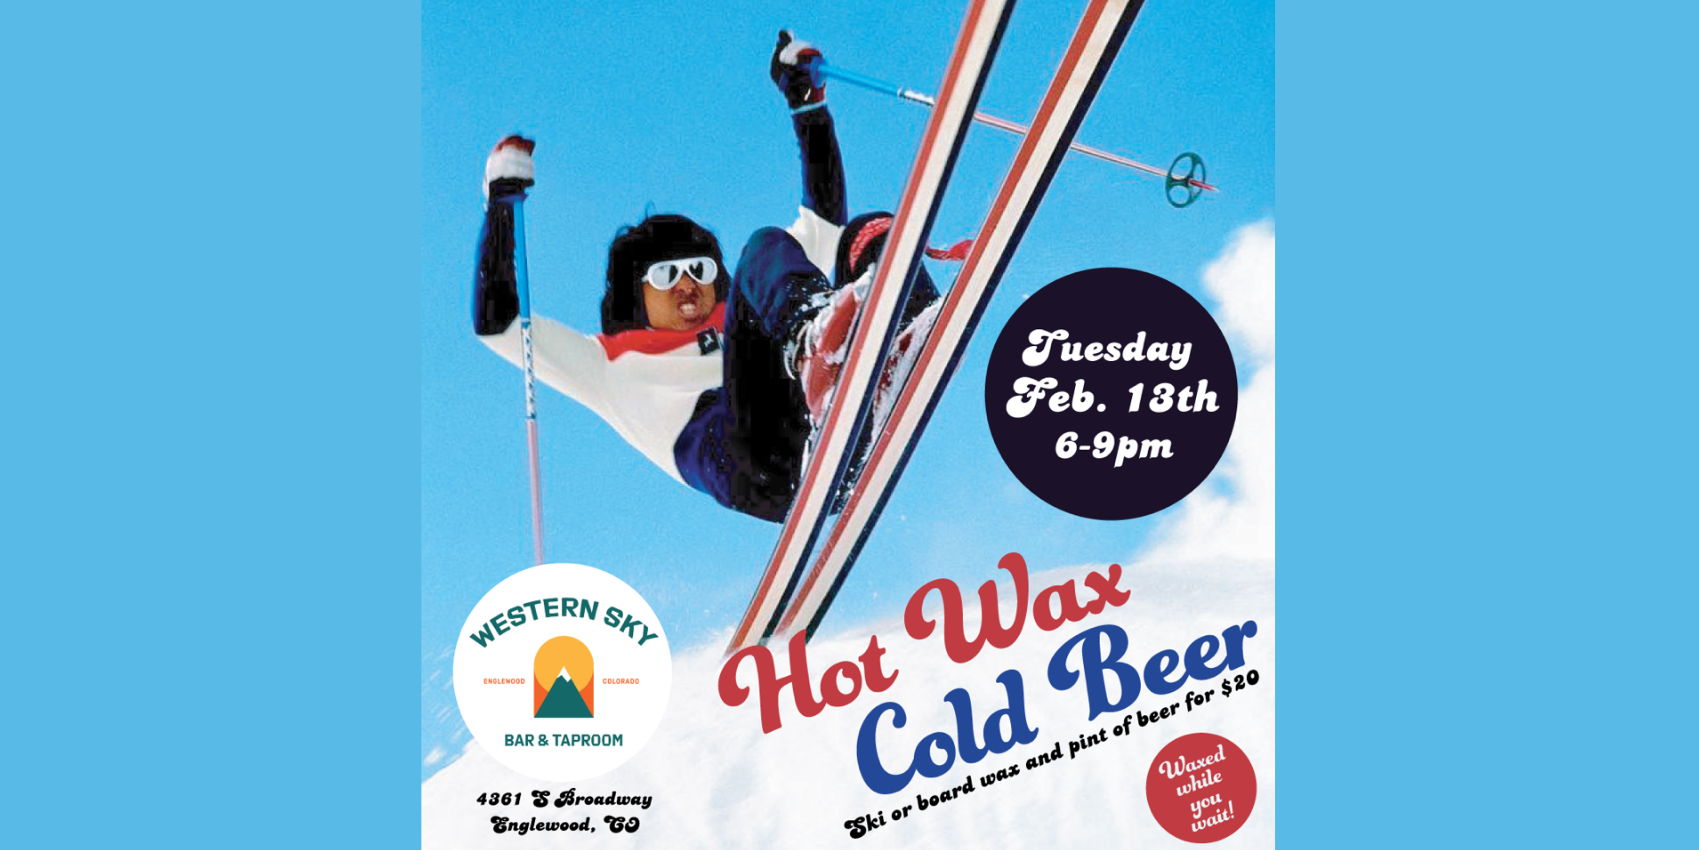 Hot Wax & Cold Beer : Ski & Snowboard Wax at Western Sky Bar & Taproom promotional image